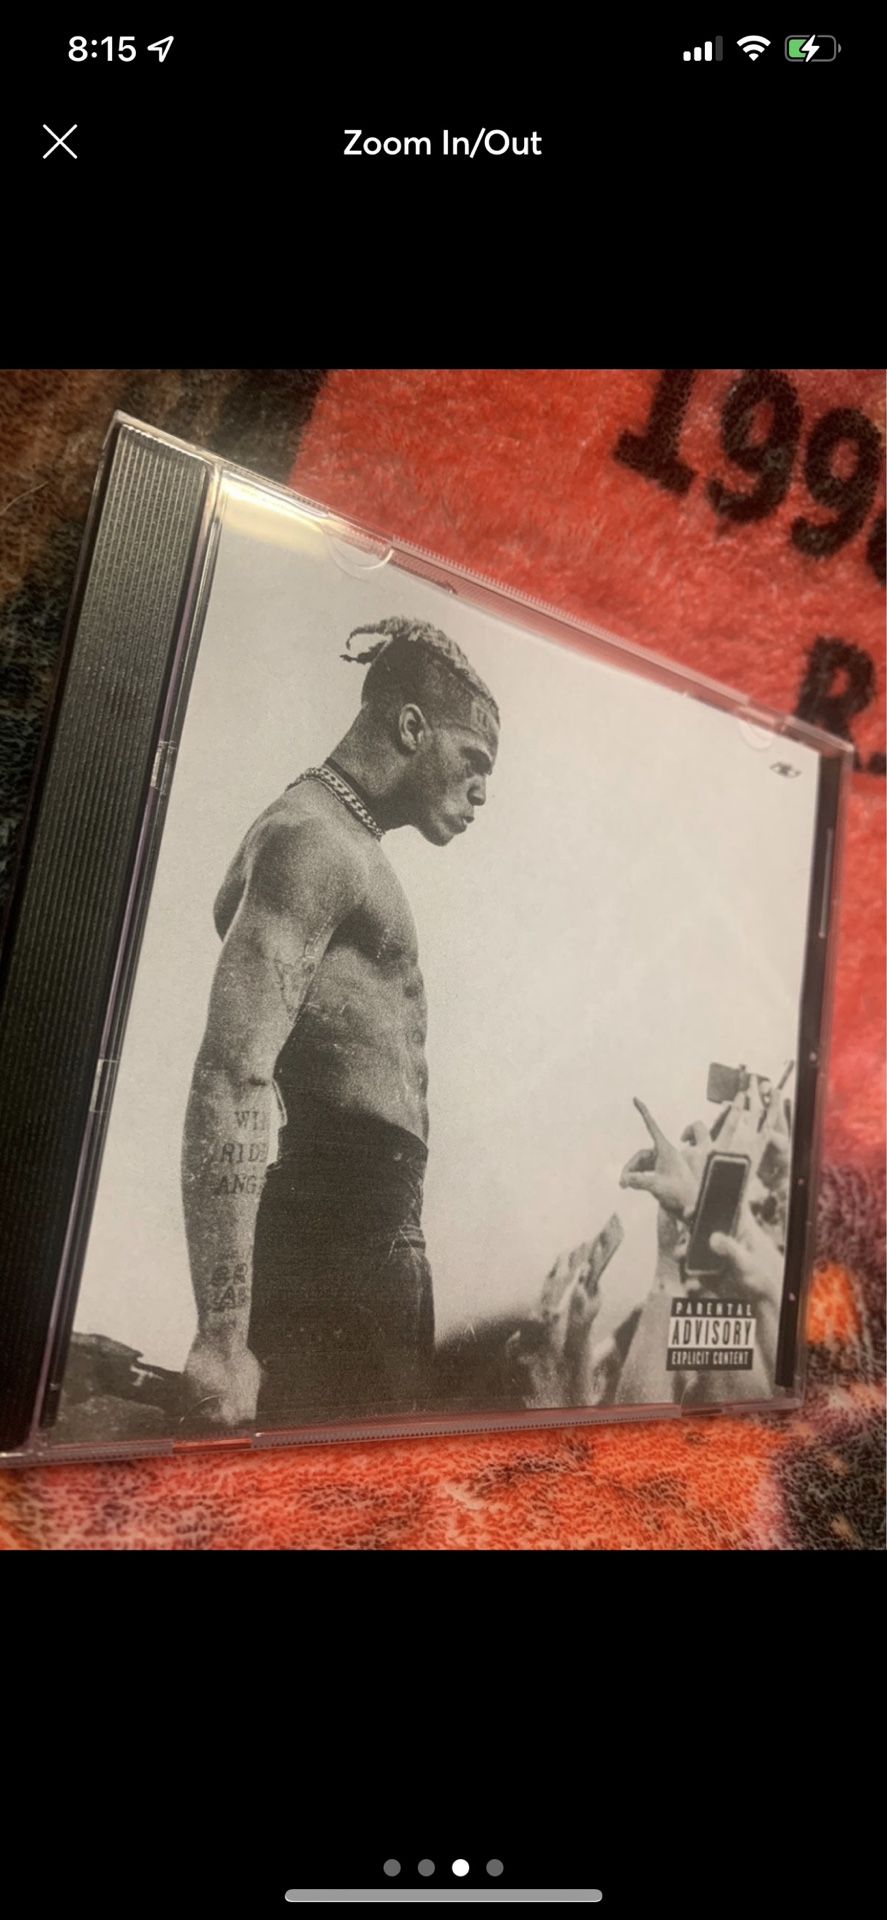 XXXTentacion Look At Me: The Album CD